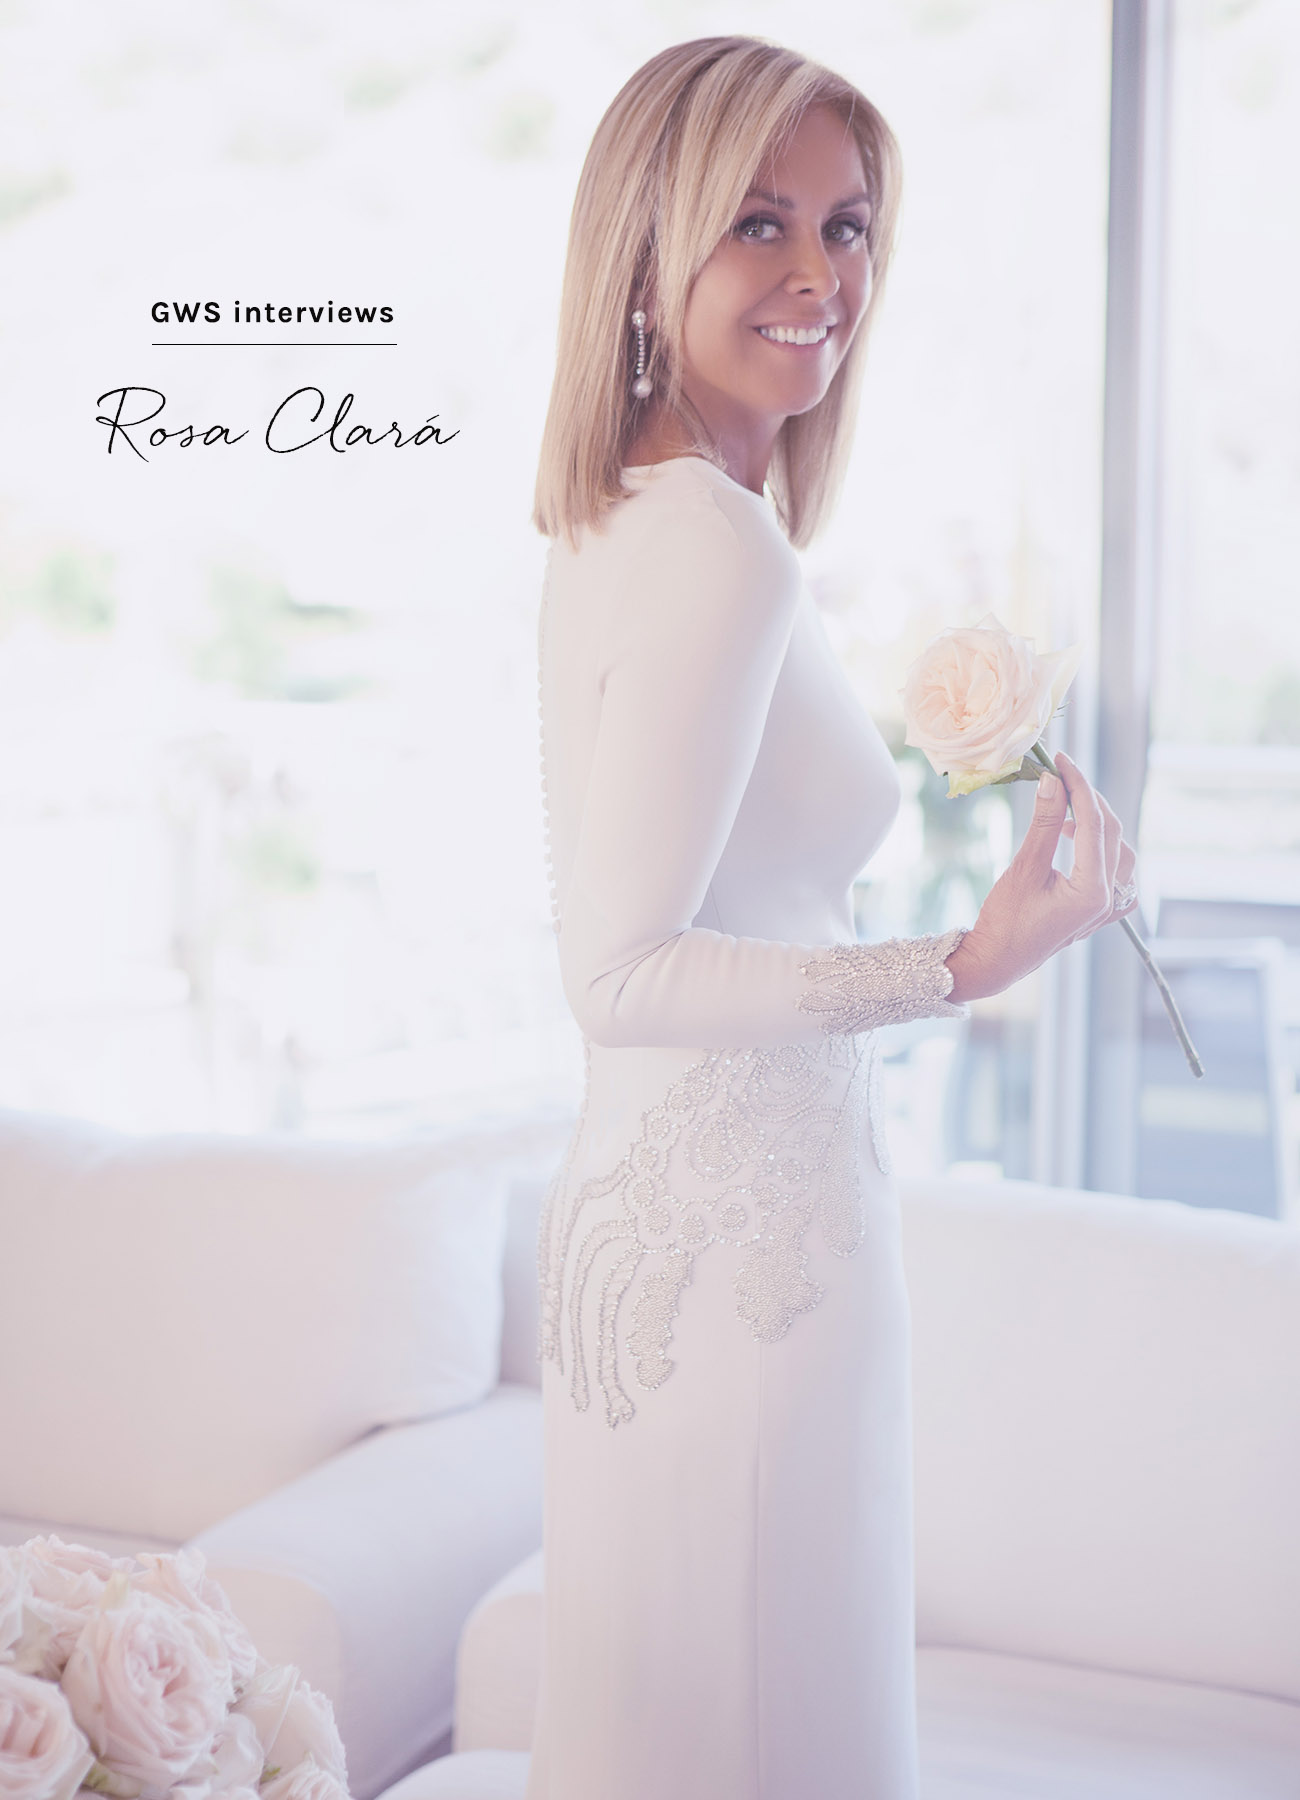 Rosa Clara Interview